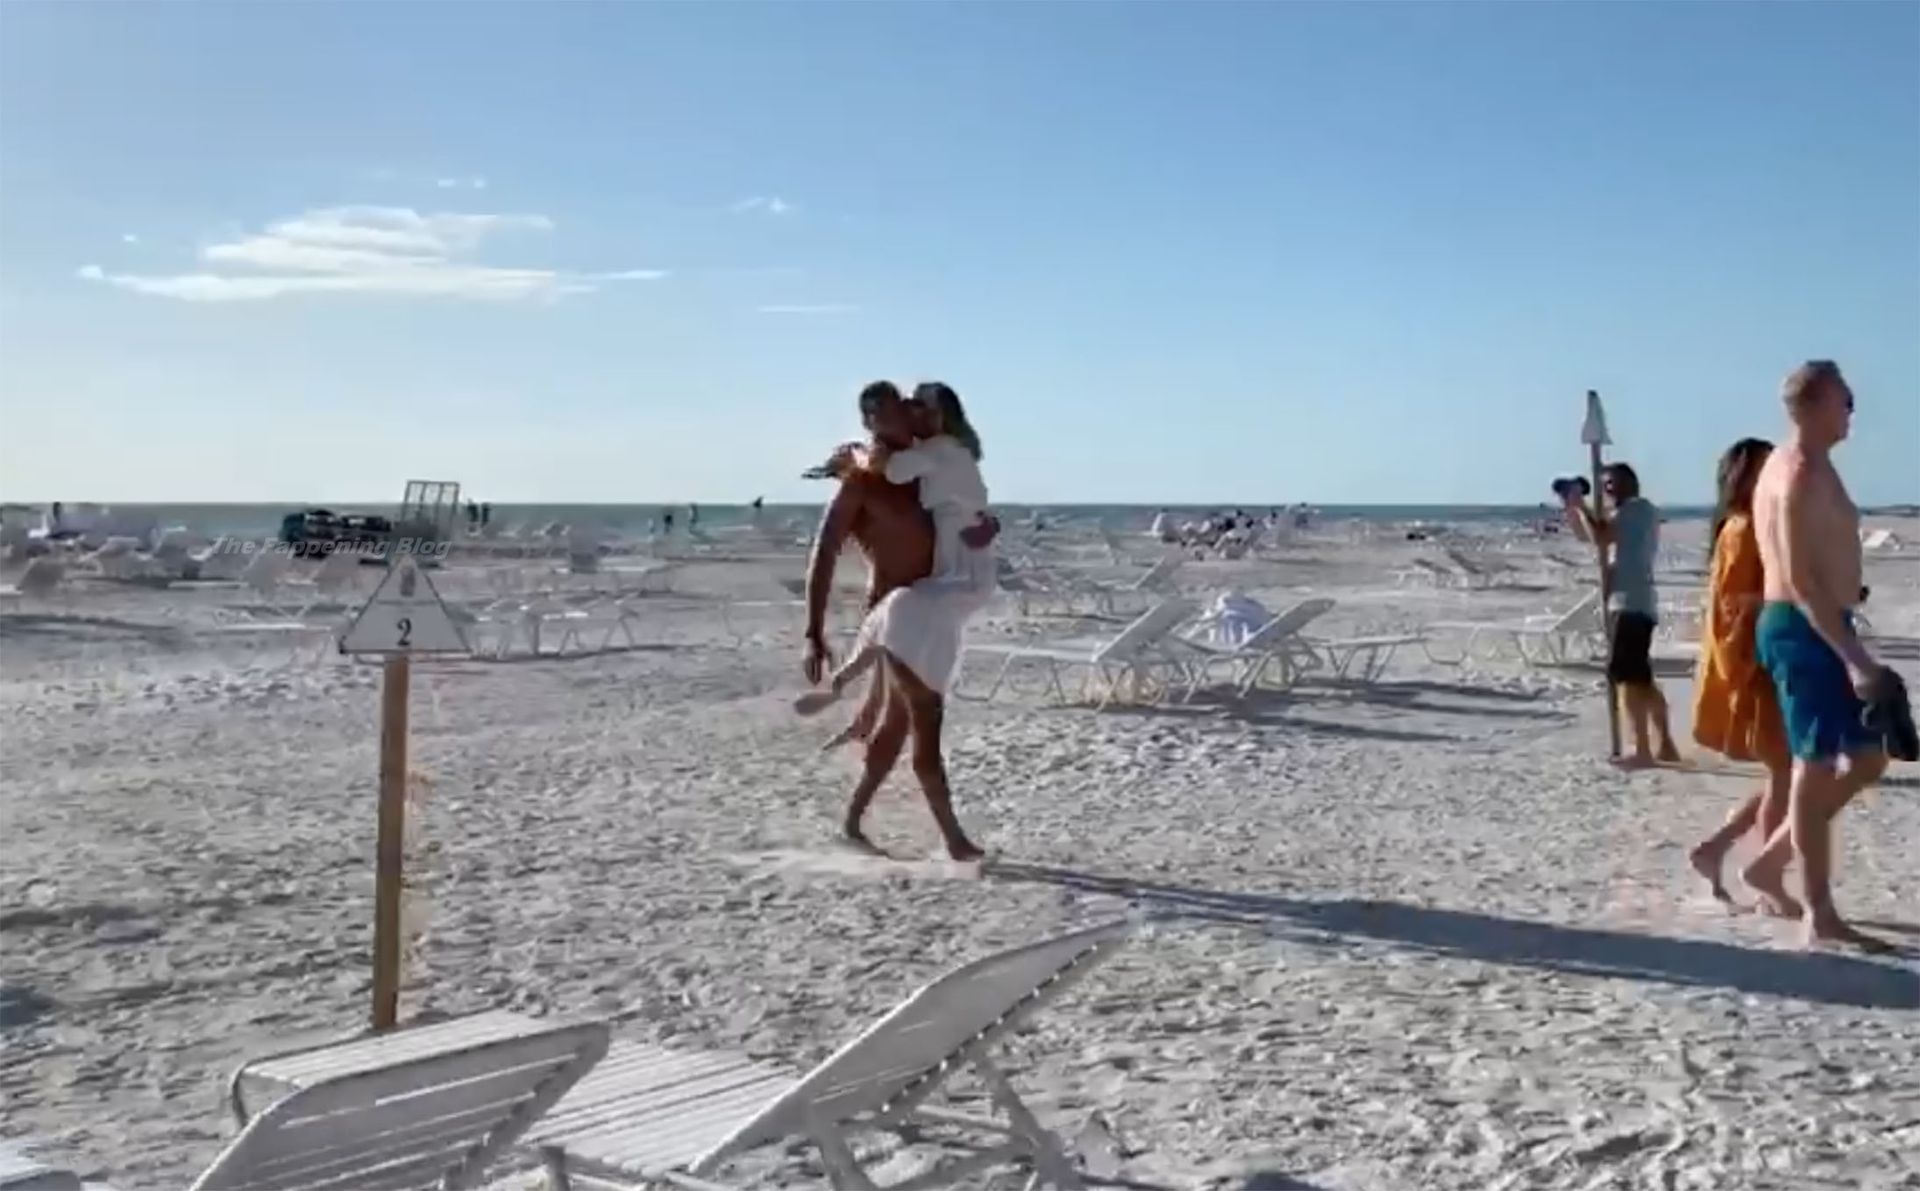 Clare Crawley  Dale Moss Enjoy a Flirty Beach Day in Florida (21 Photos)